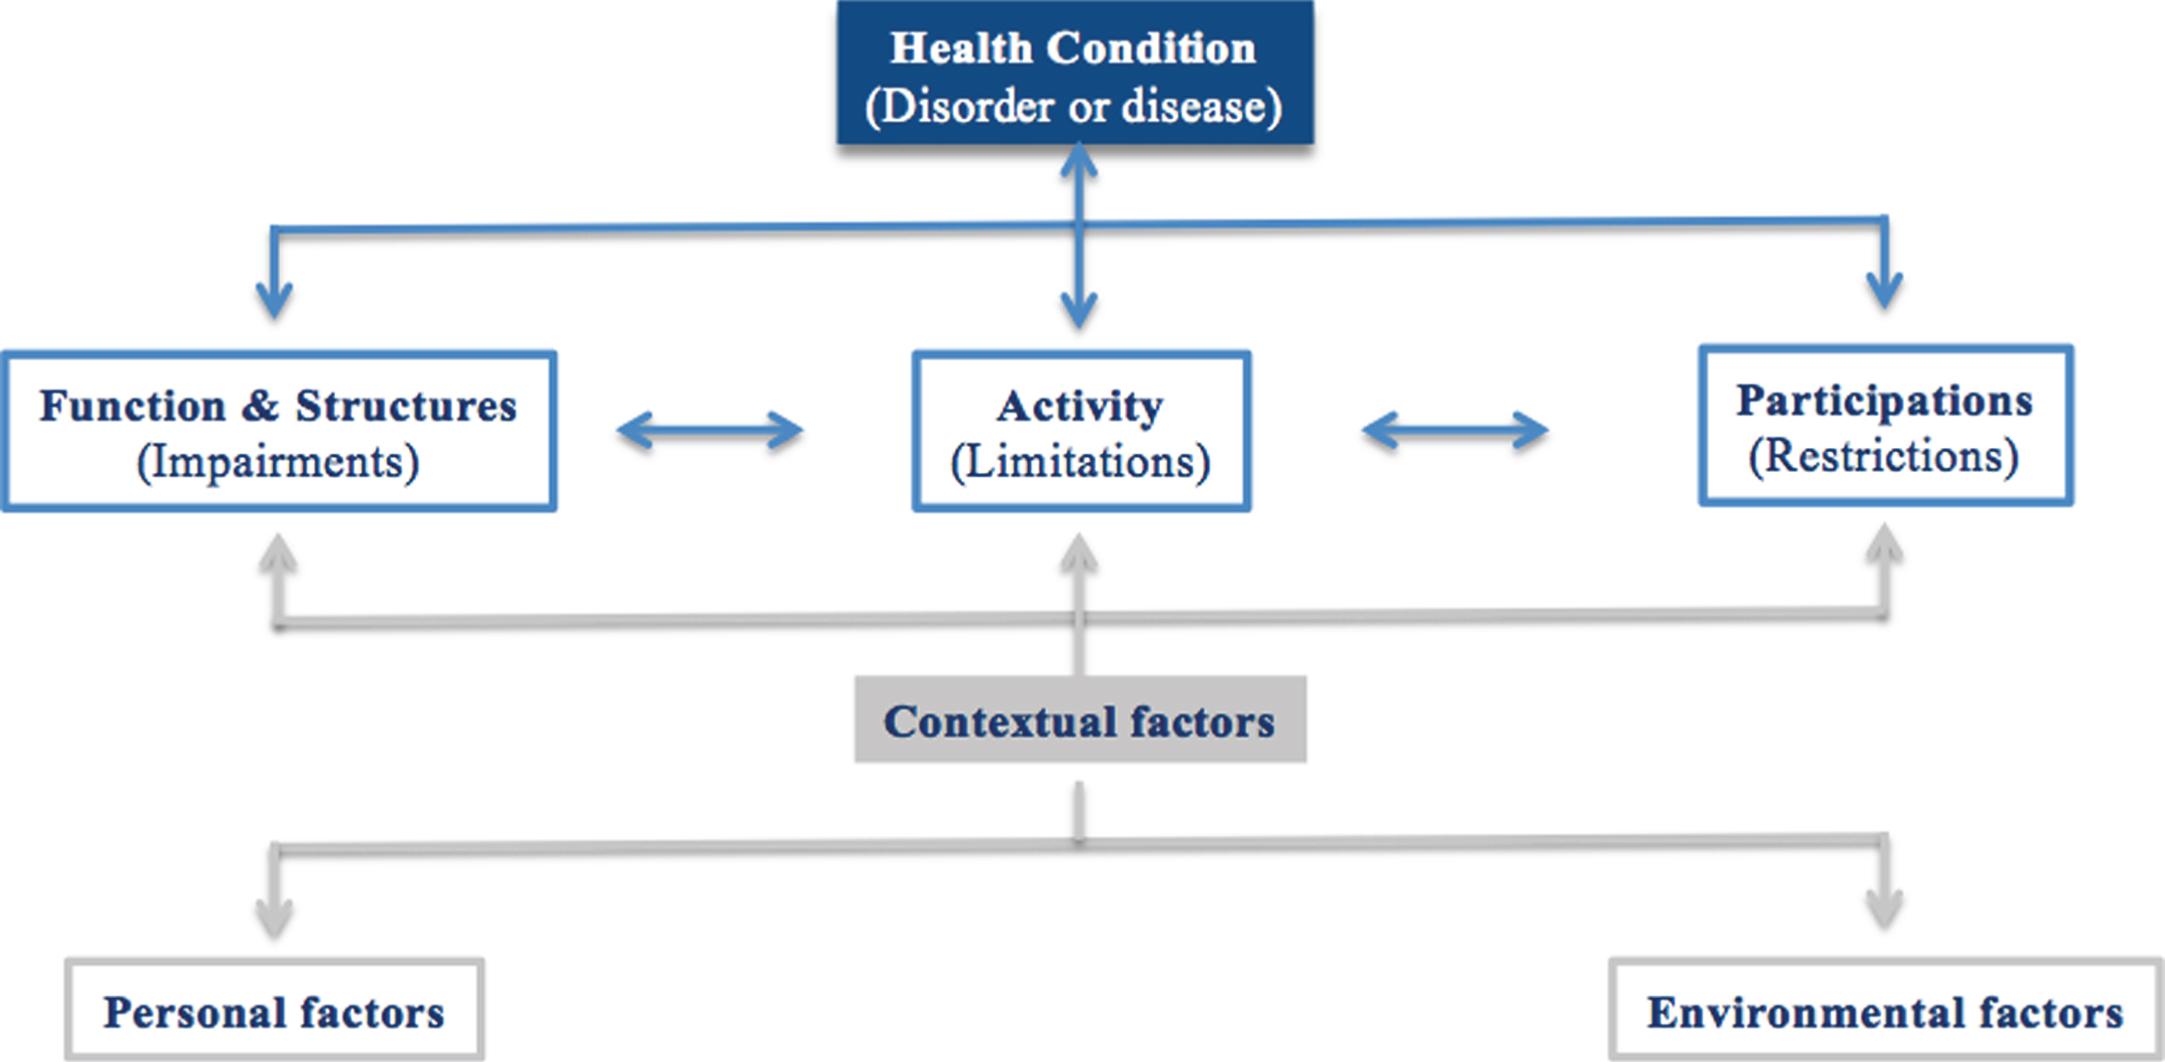 ICF framework. Adapted from World Health Organization (2002) [12].